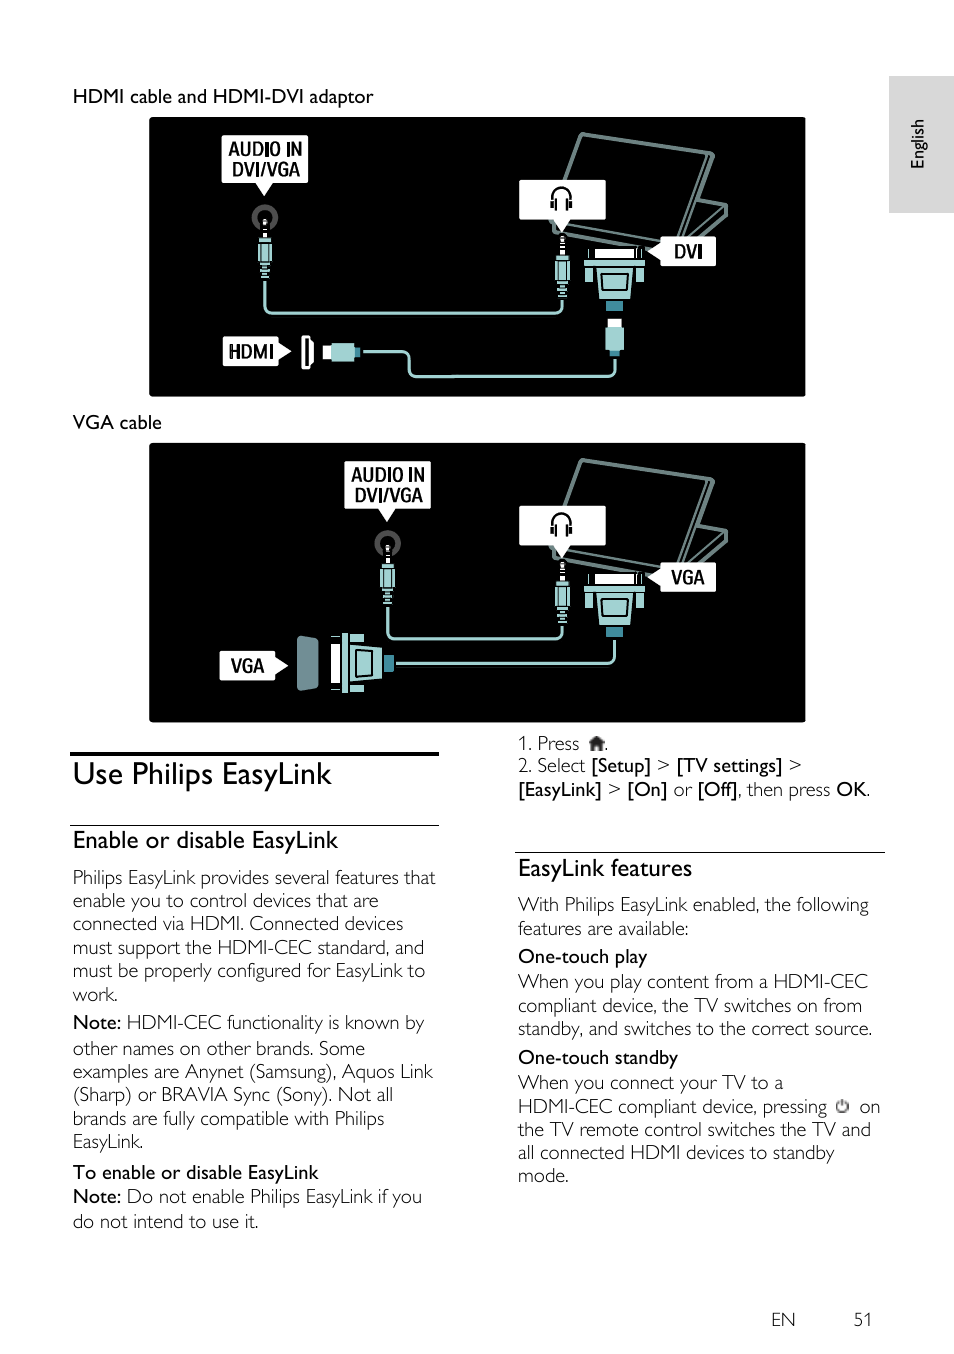 Afskedige Encyclopedia Botanik Use philips easylink, Enable or disable easylink, Easylink features |  Philips 46PFL5605H-12 User Manual | Page 51 / 65